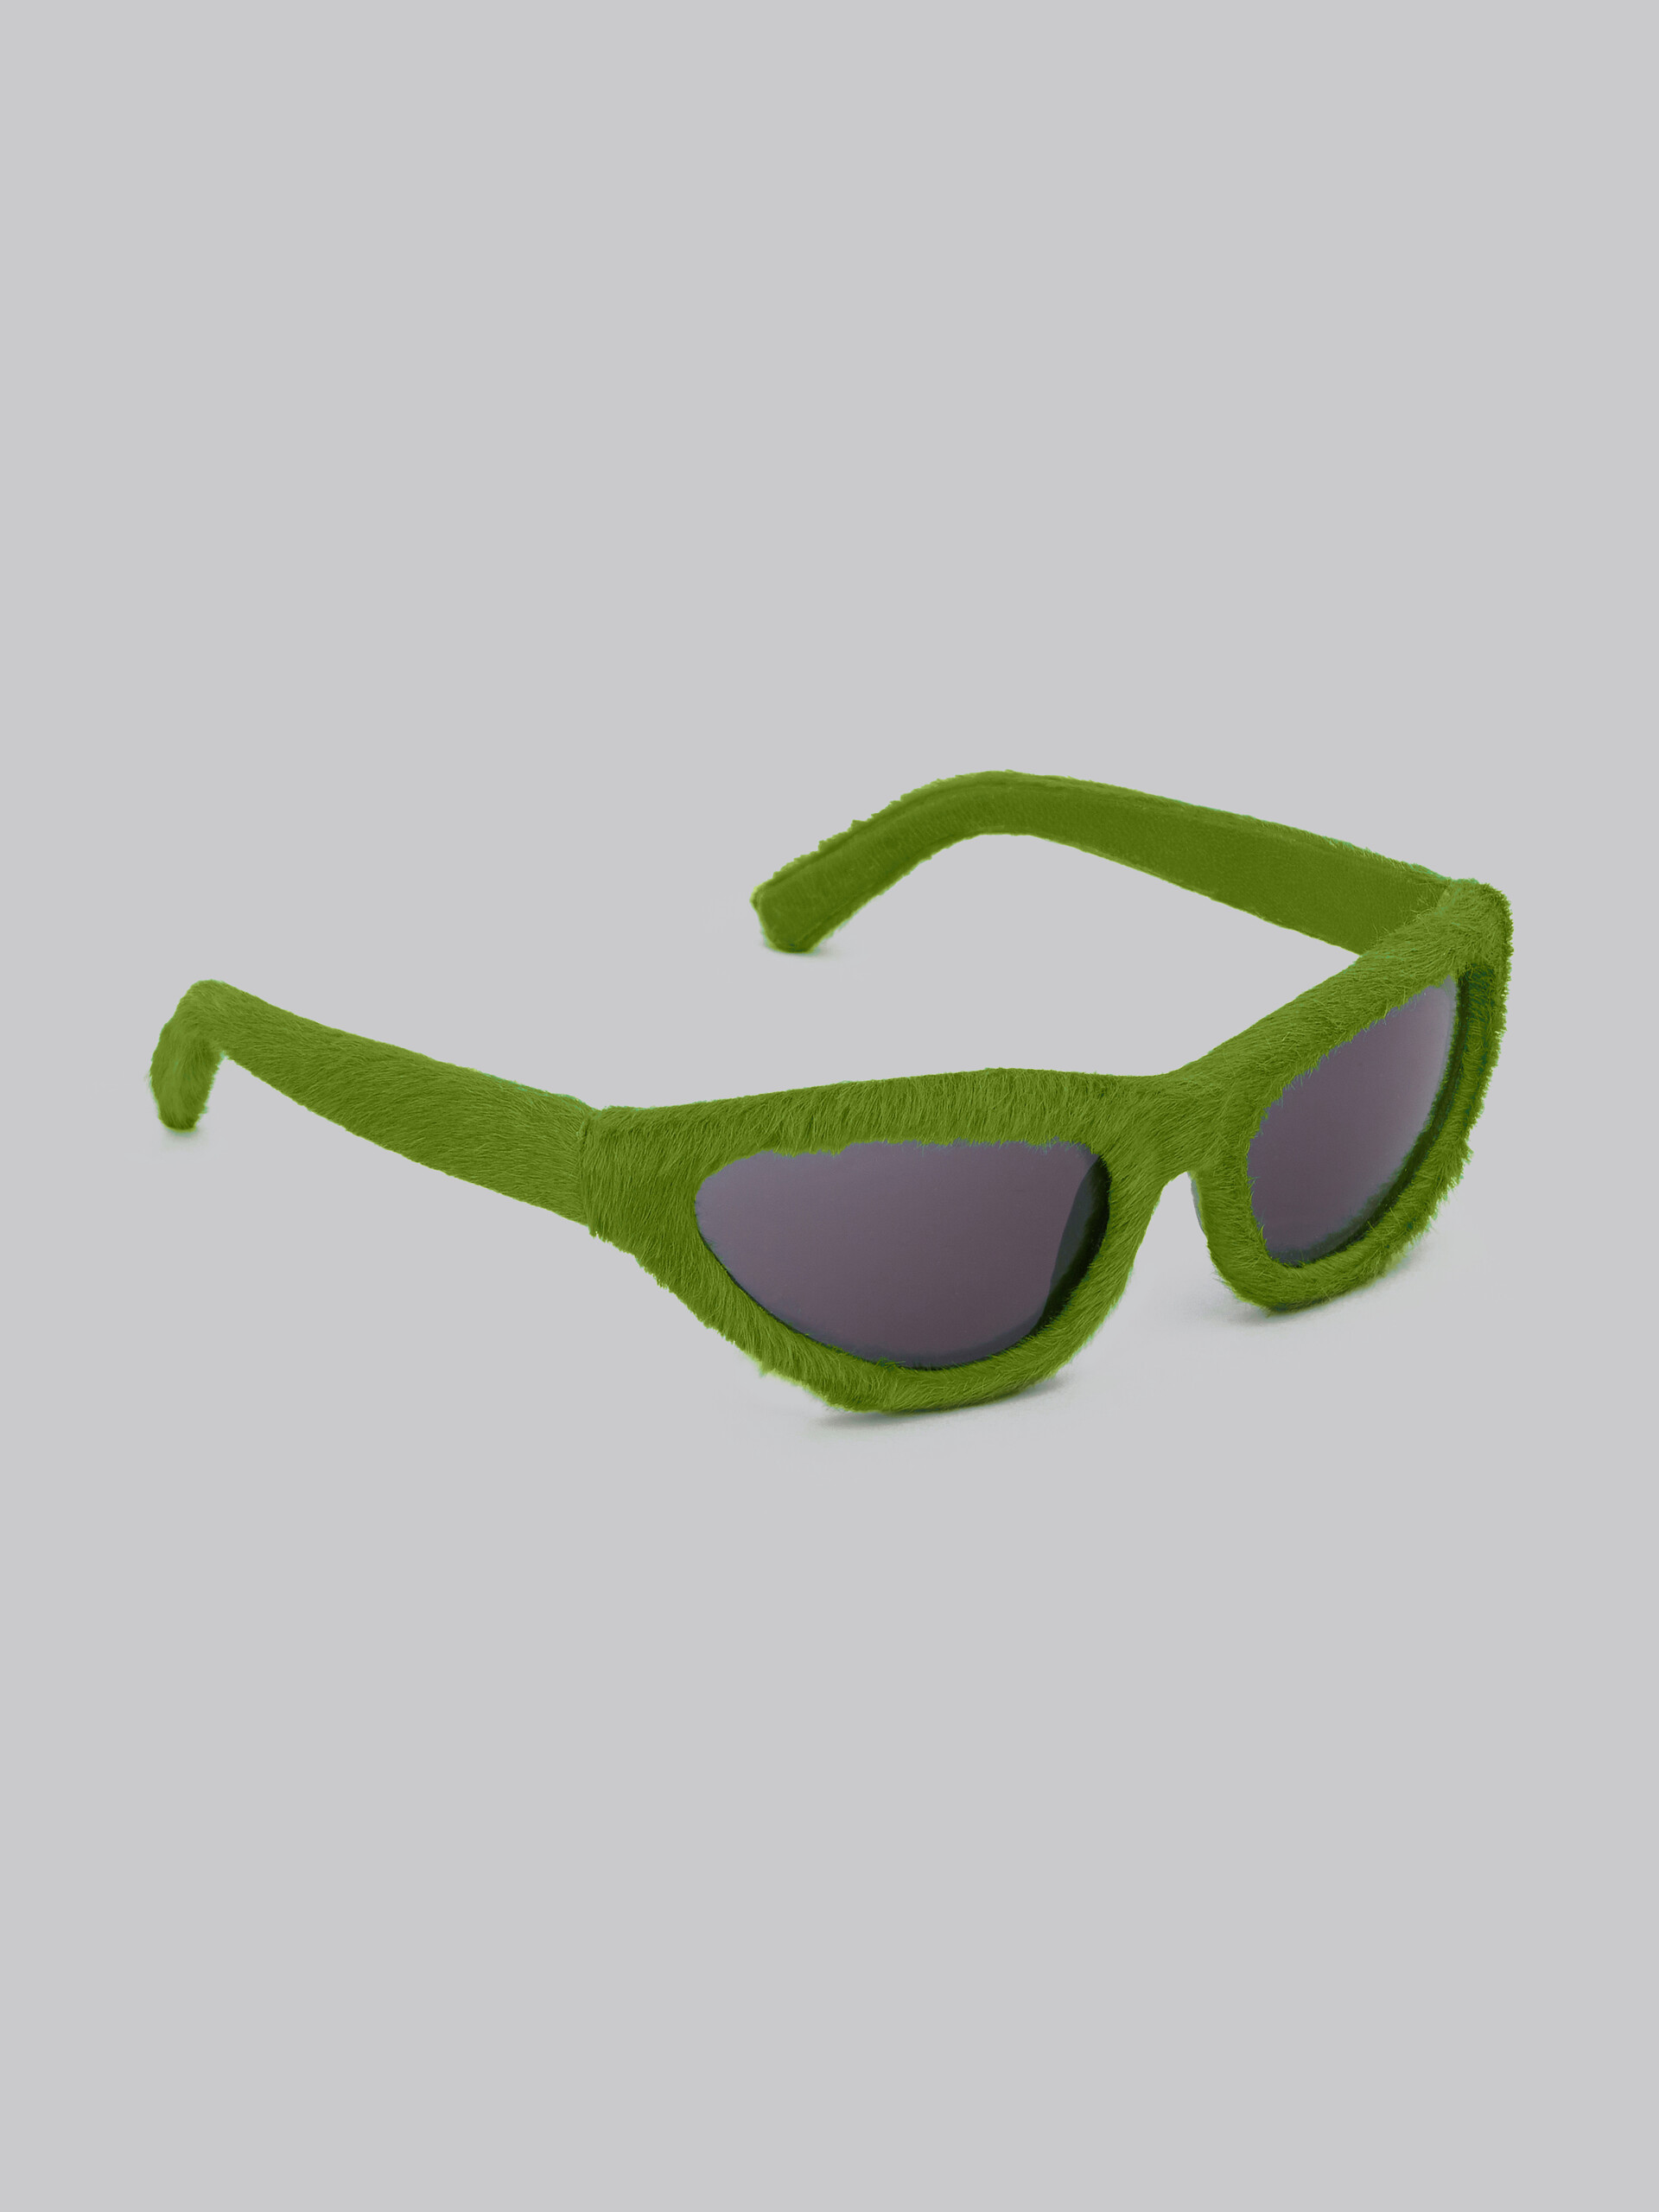 Mavericks furry green sunglasses - Optical - Image 3